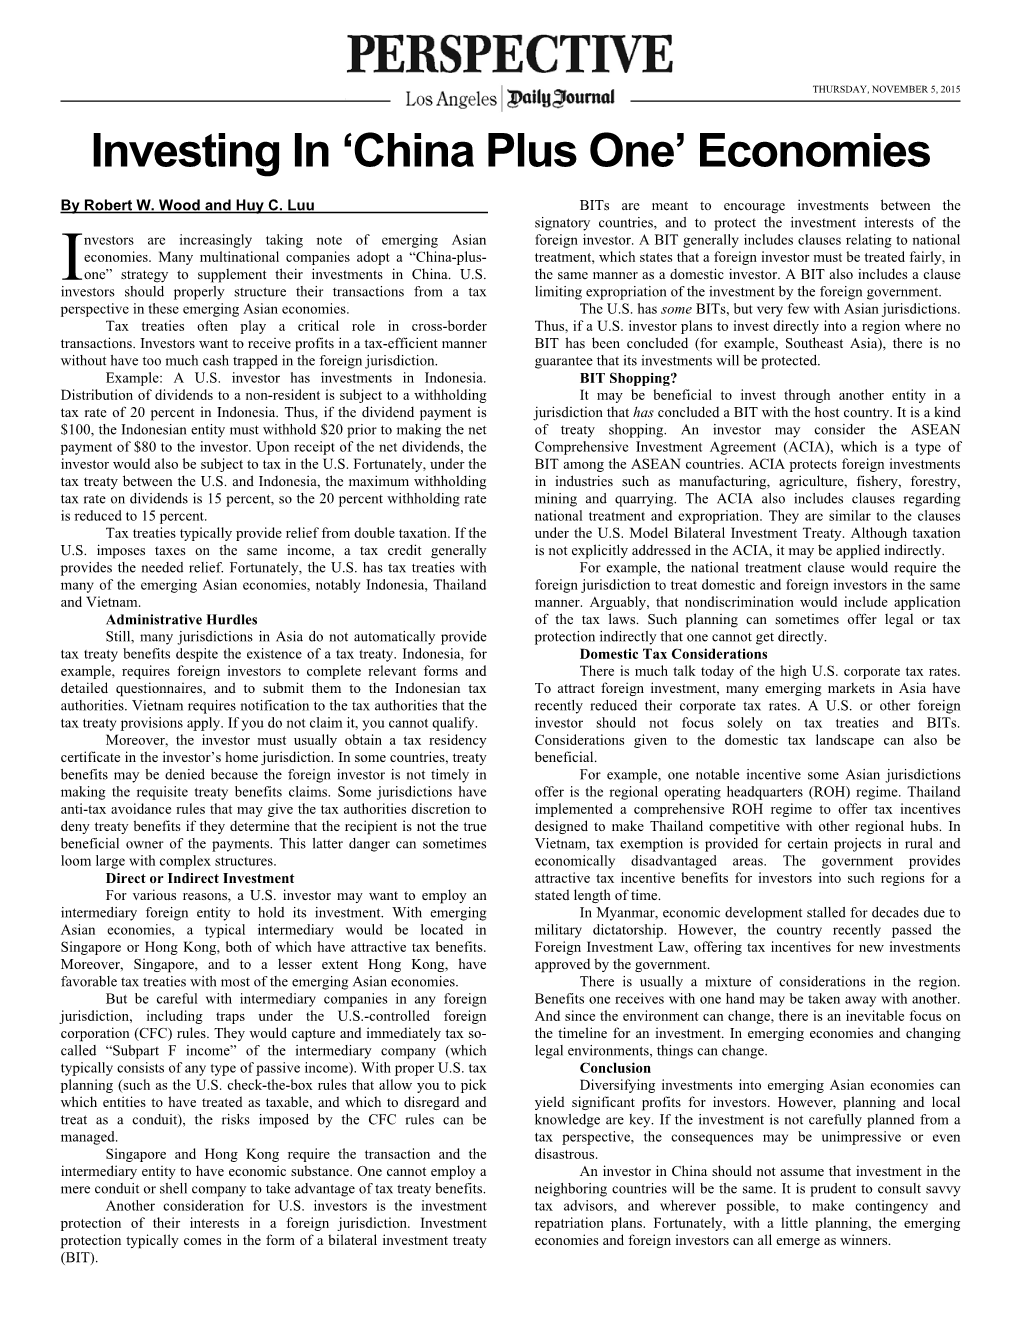 Investing in 'China Plus One' Economies